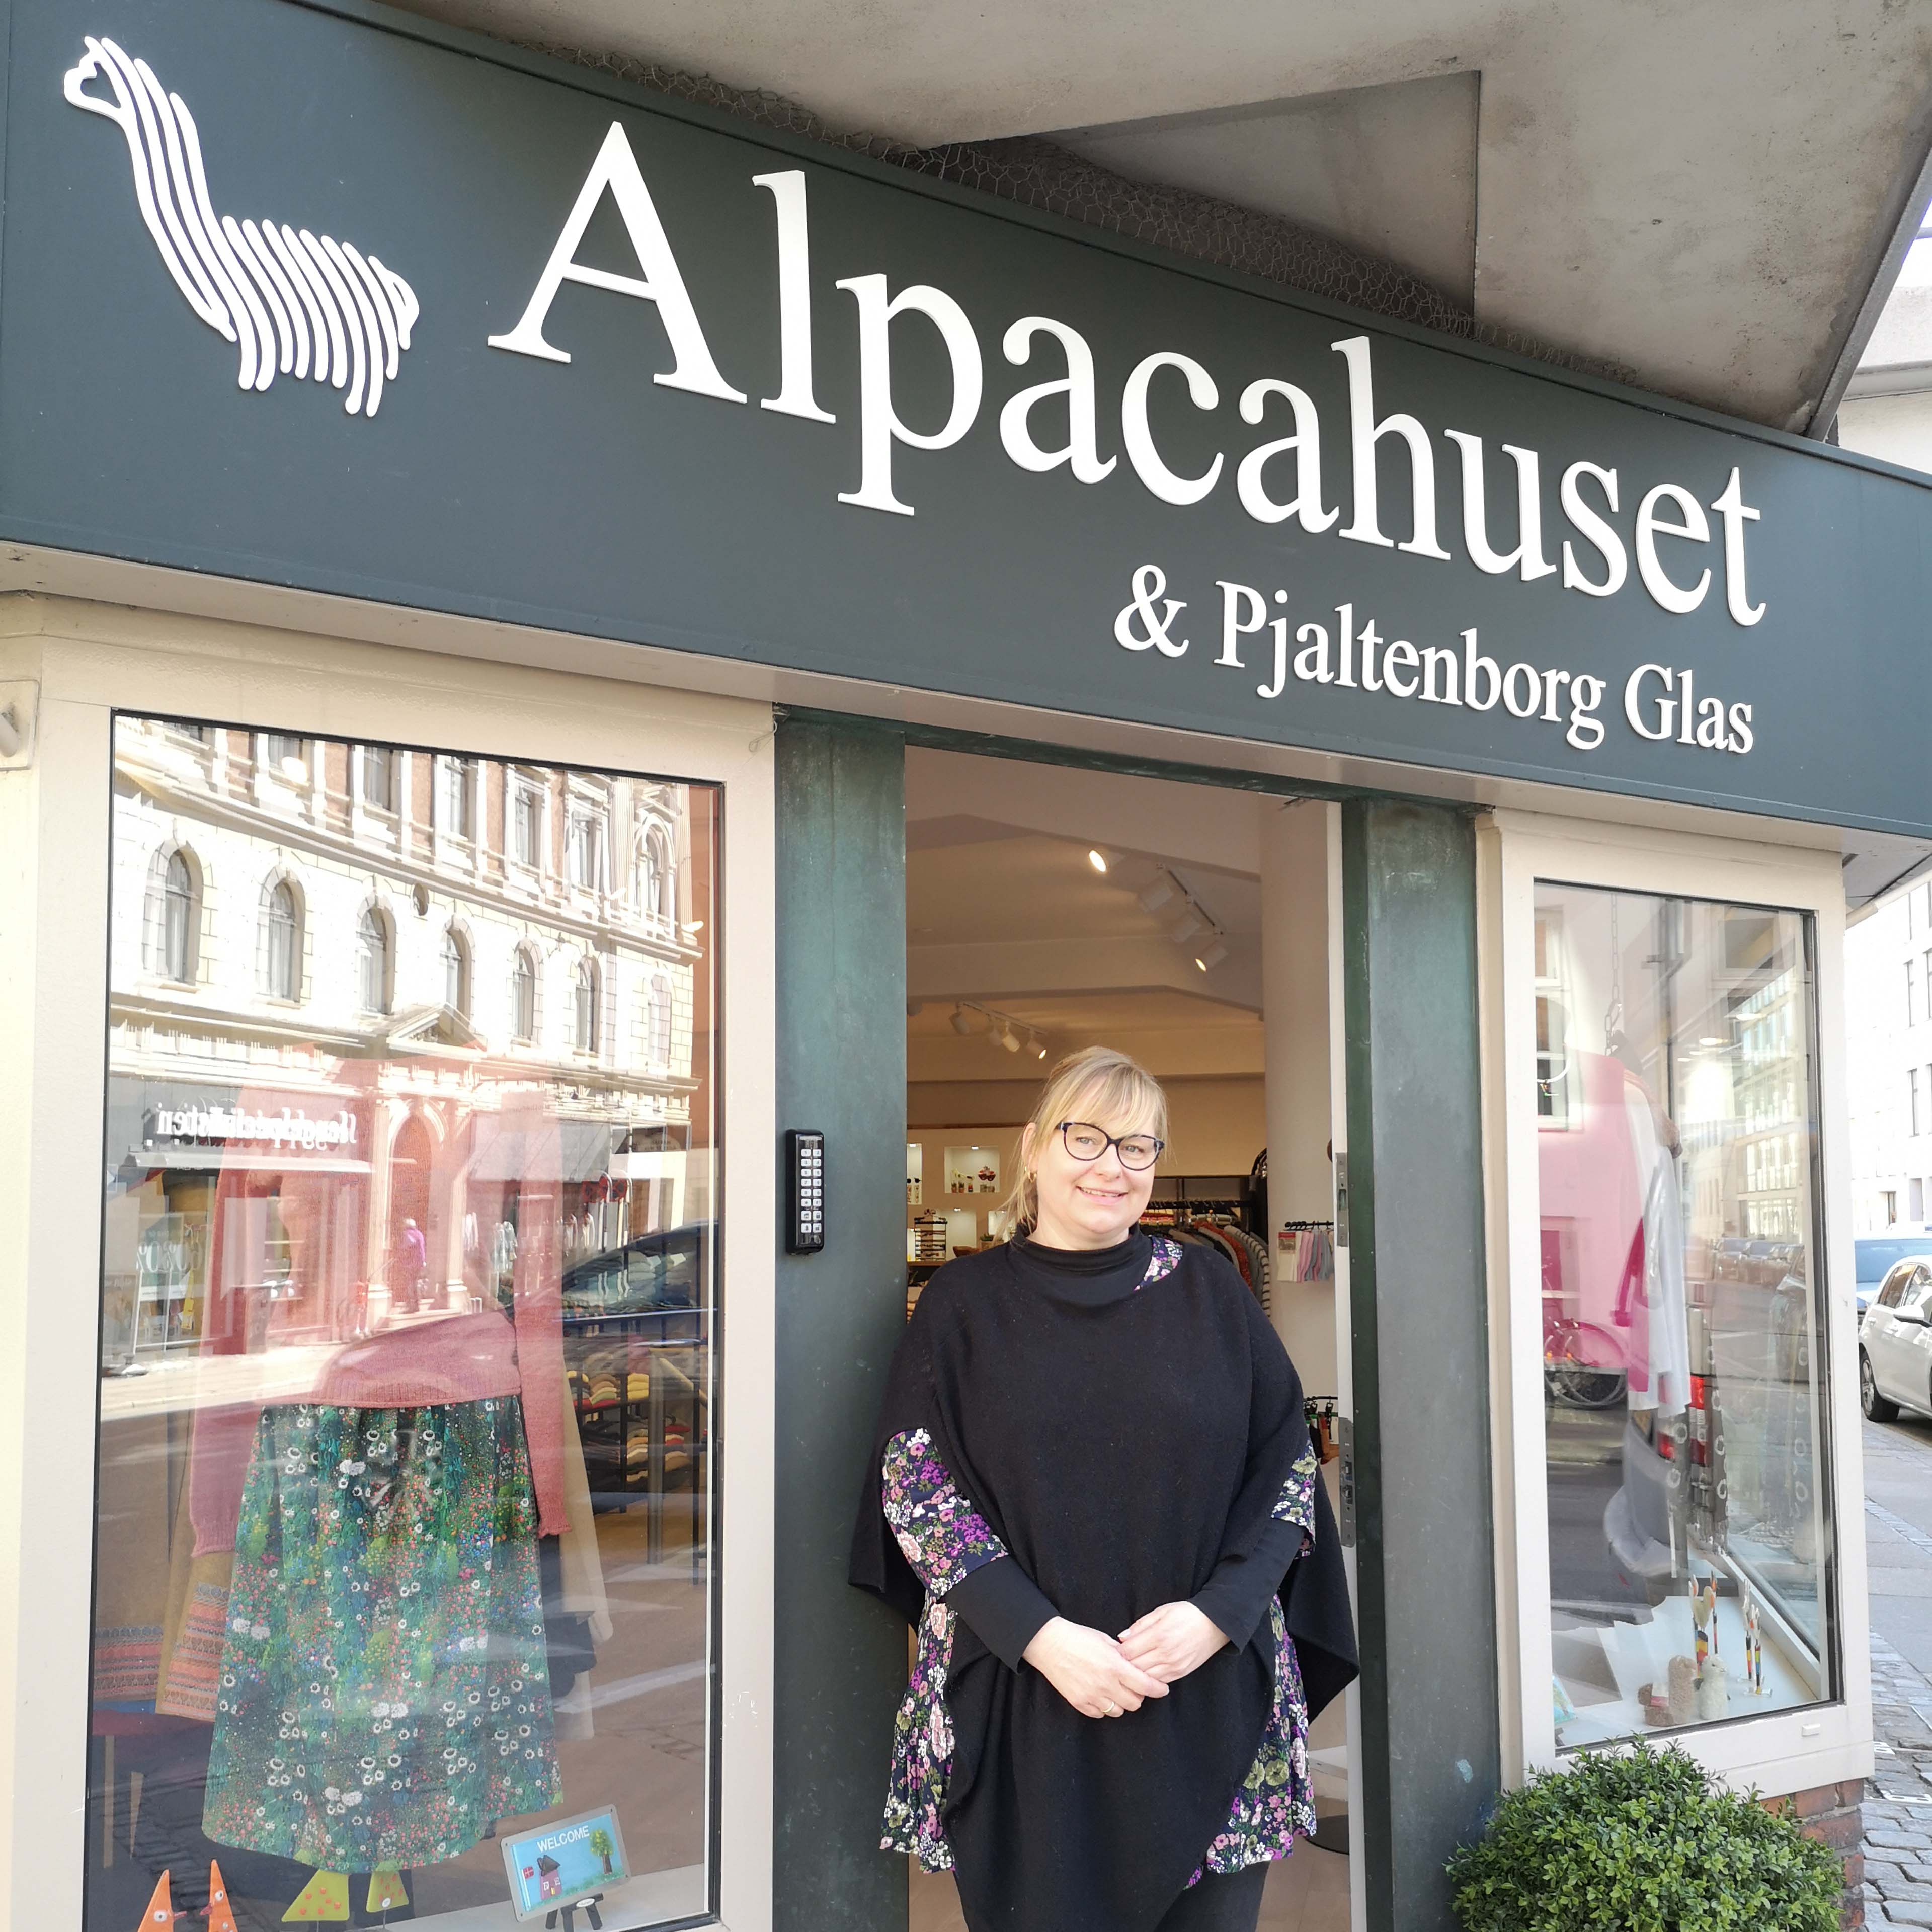 Alpacahuset i københavn har fået G4S tyverialarm